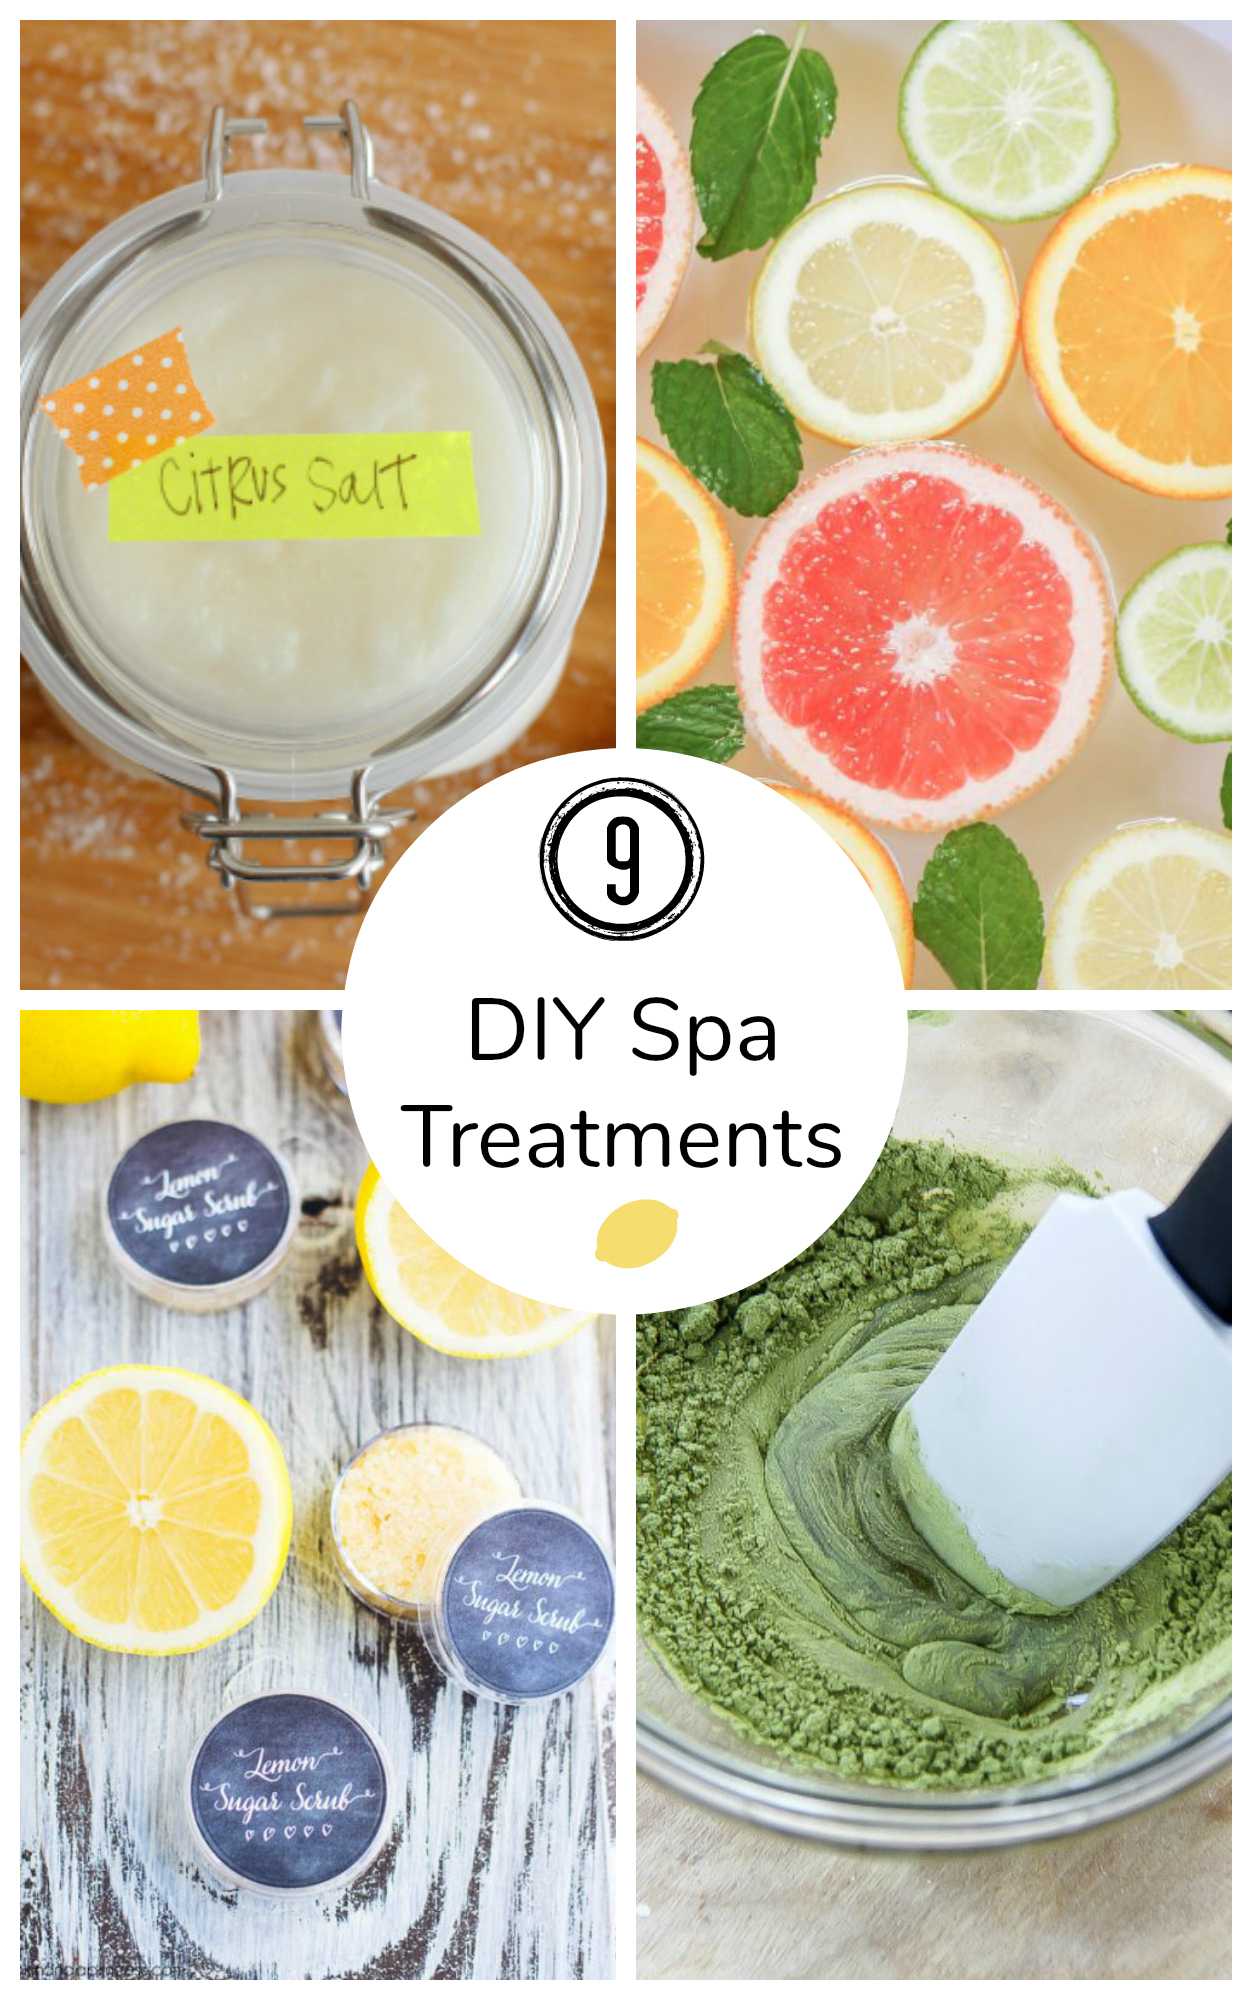 9 DIY Spa Treatments